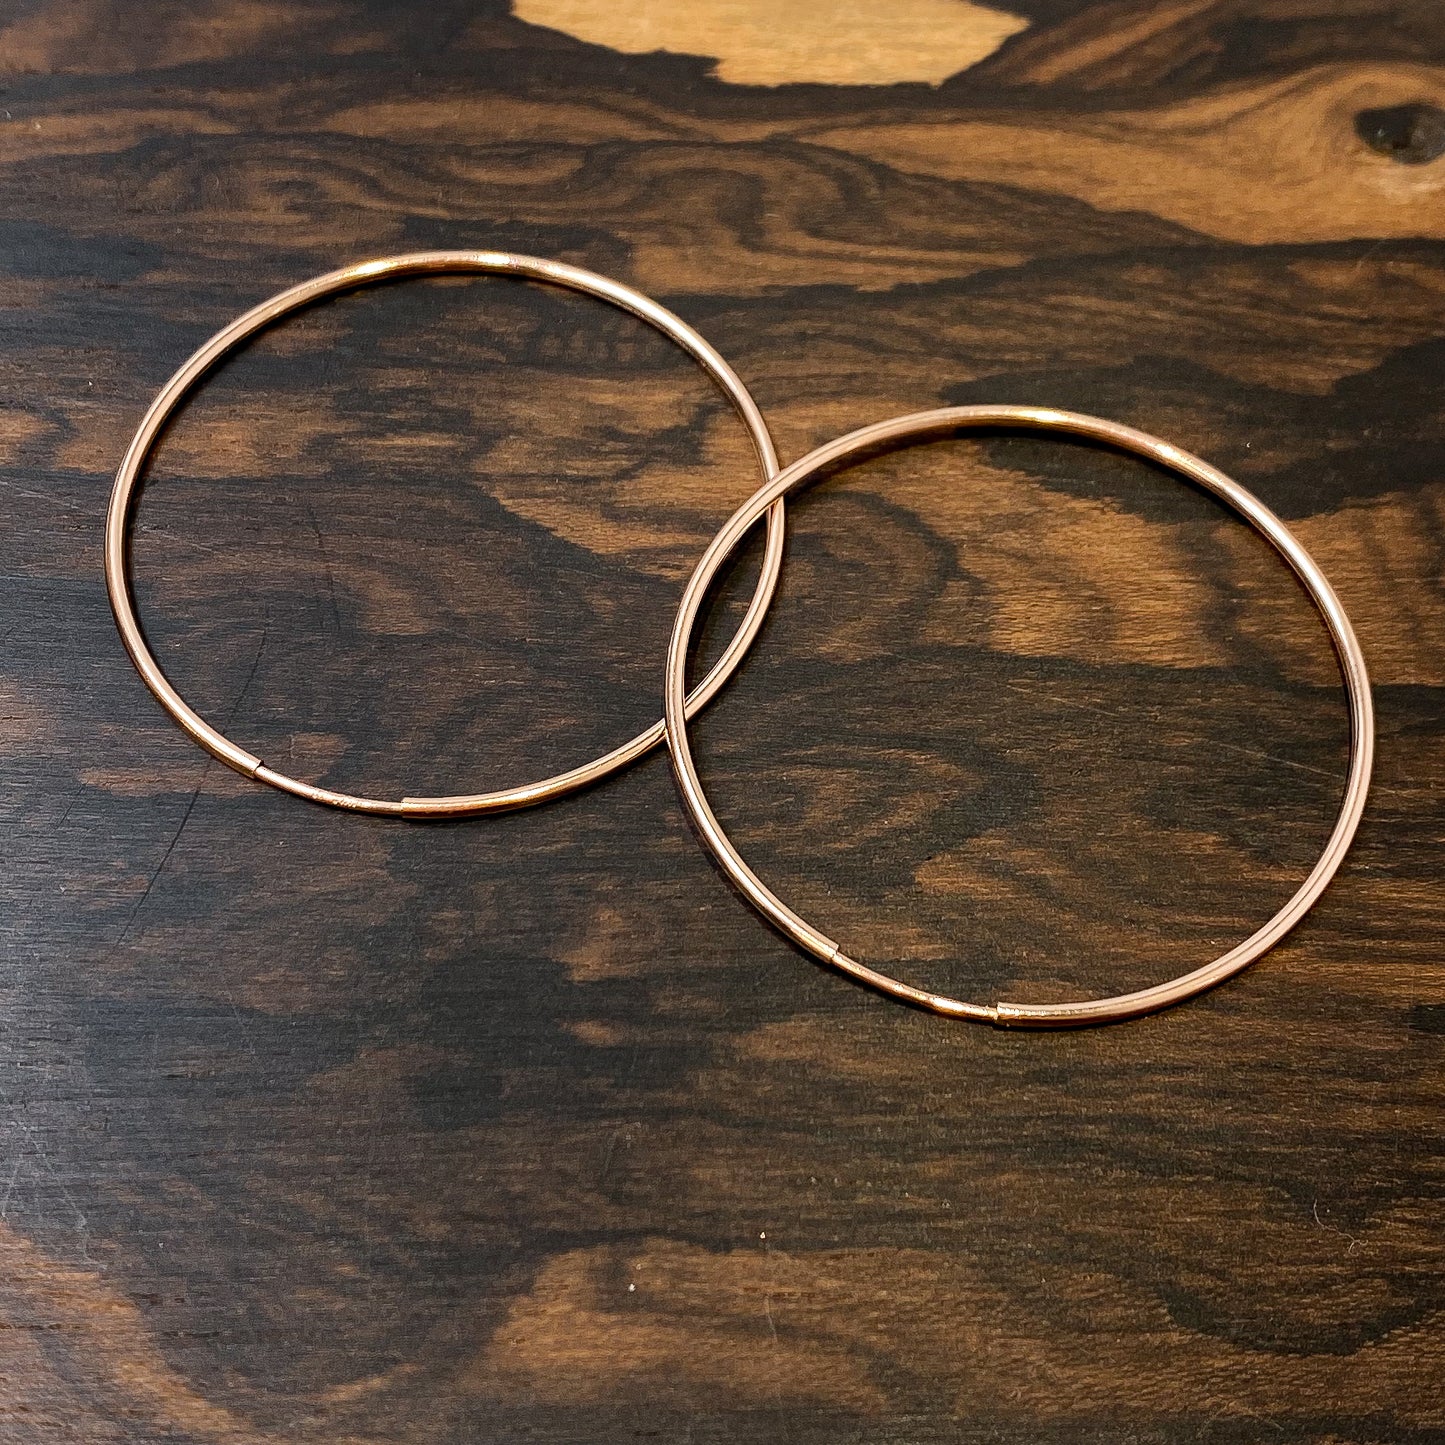 45mm Endless Hoop Earring (3 Metals Available) - 1 pair